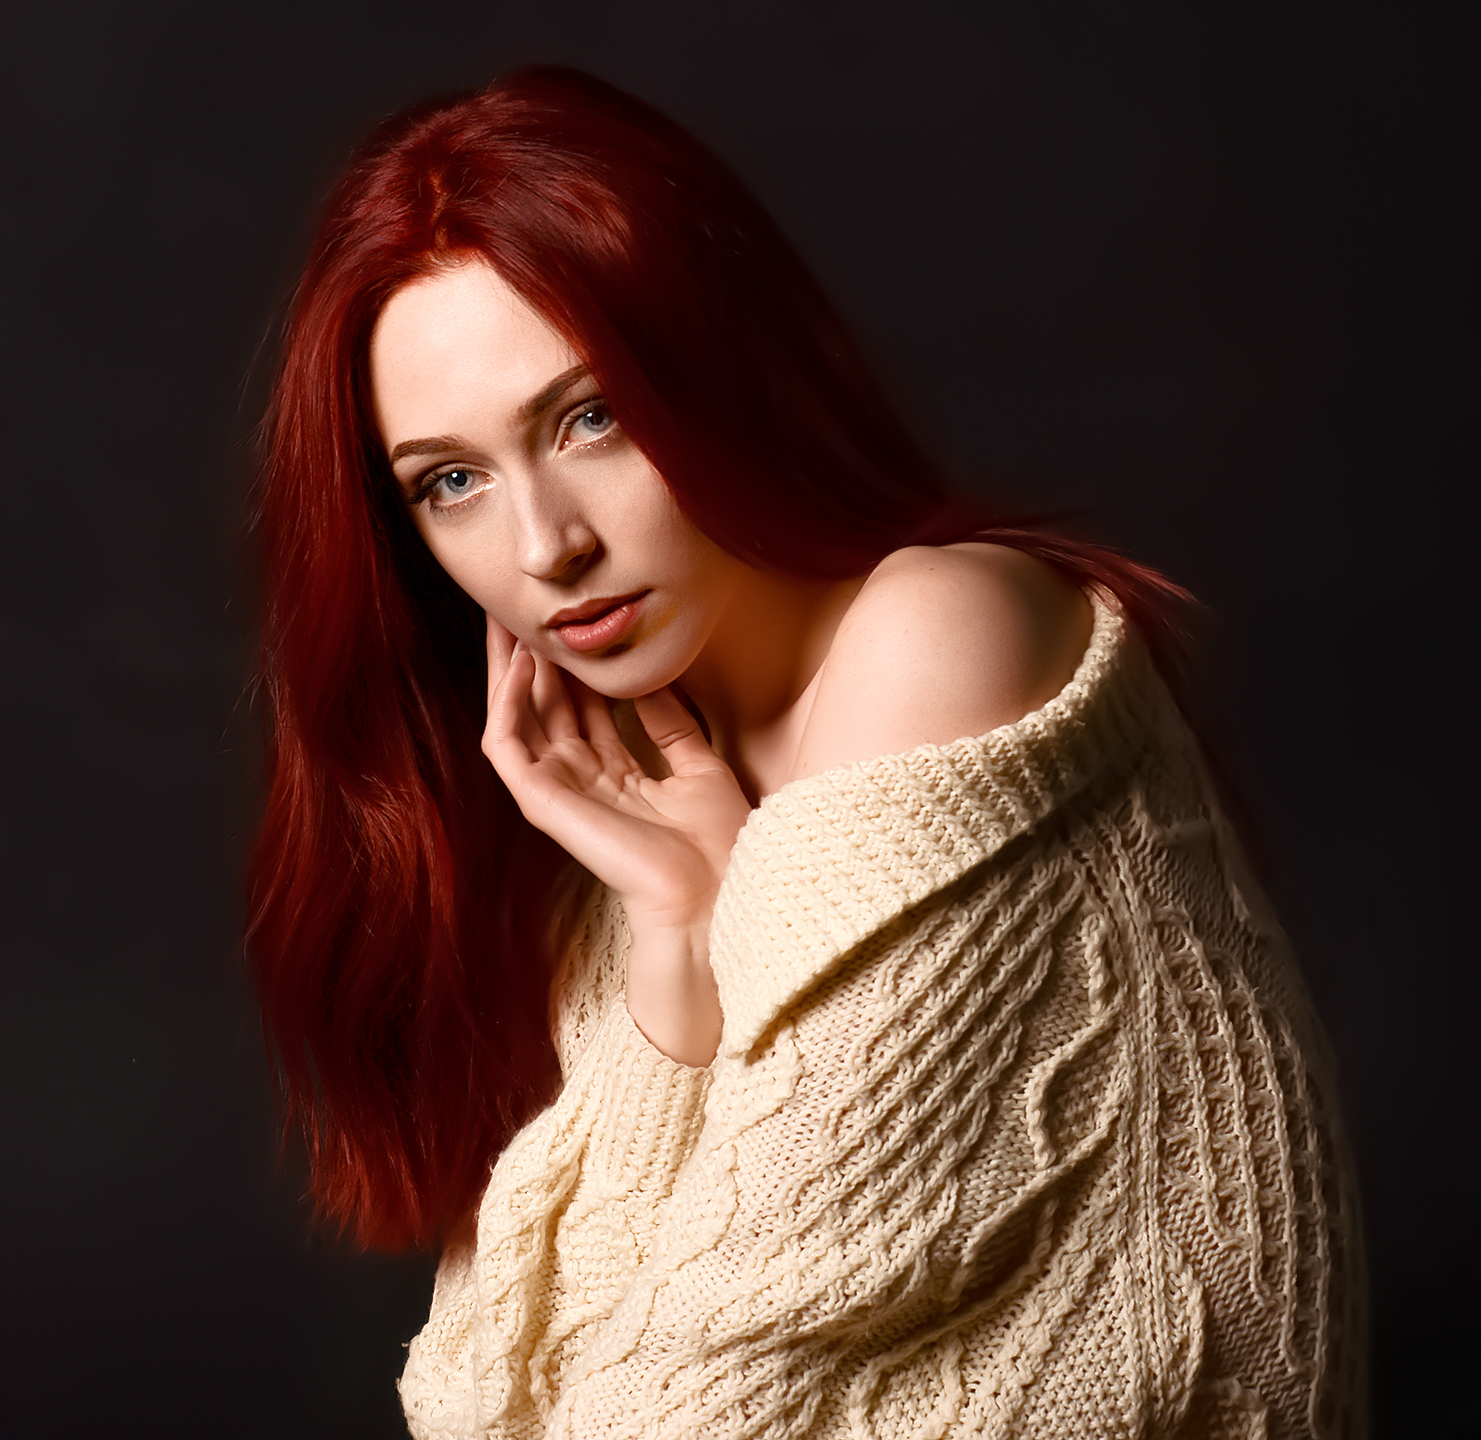 Ievgen Vozniuk Women Redhead Long Hair Wavy Hair Sweater White Clothing Makeup Blue Eyes Simple Back 1481x1440